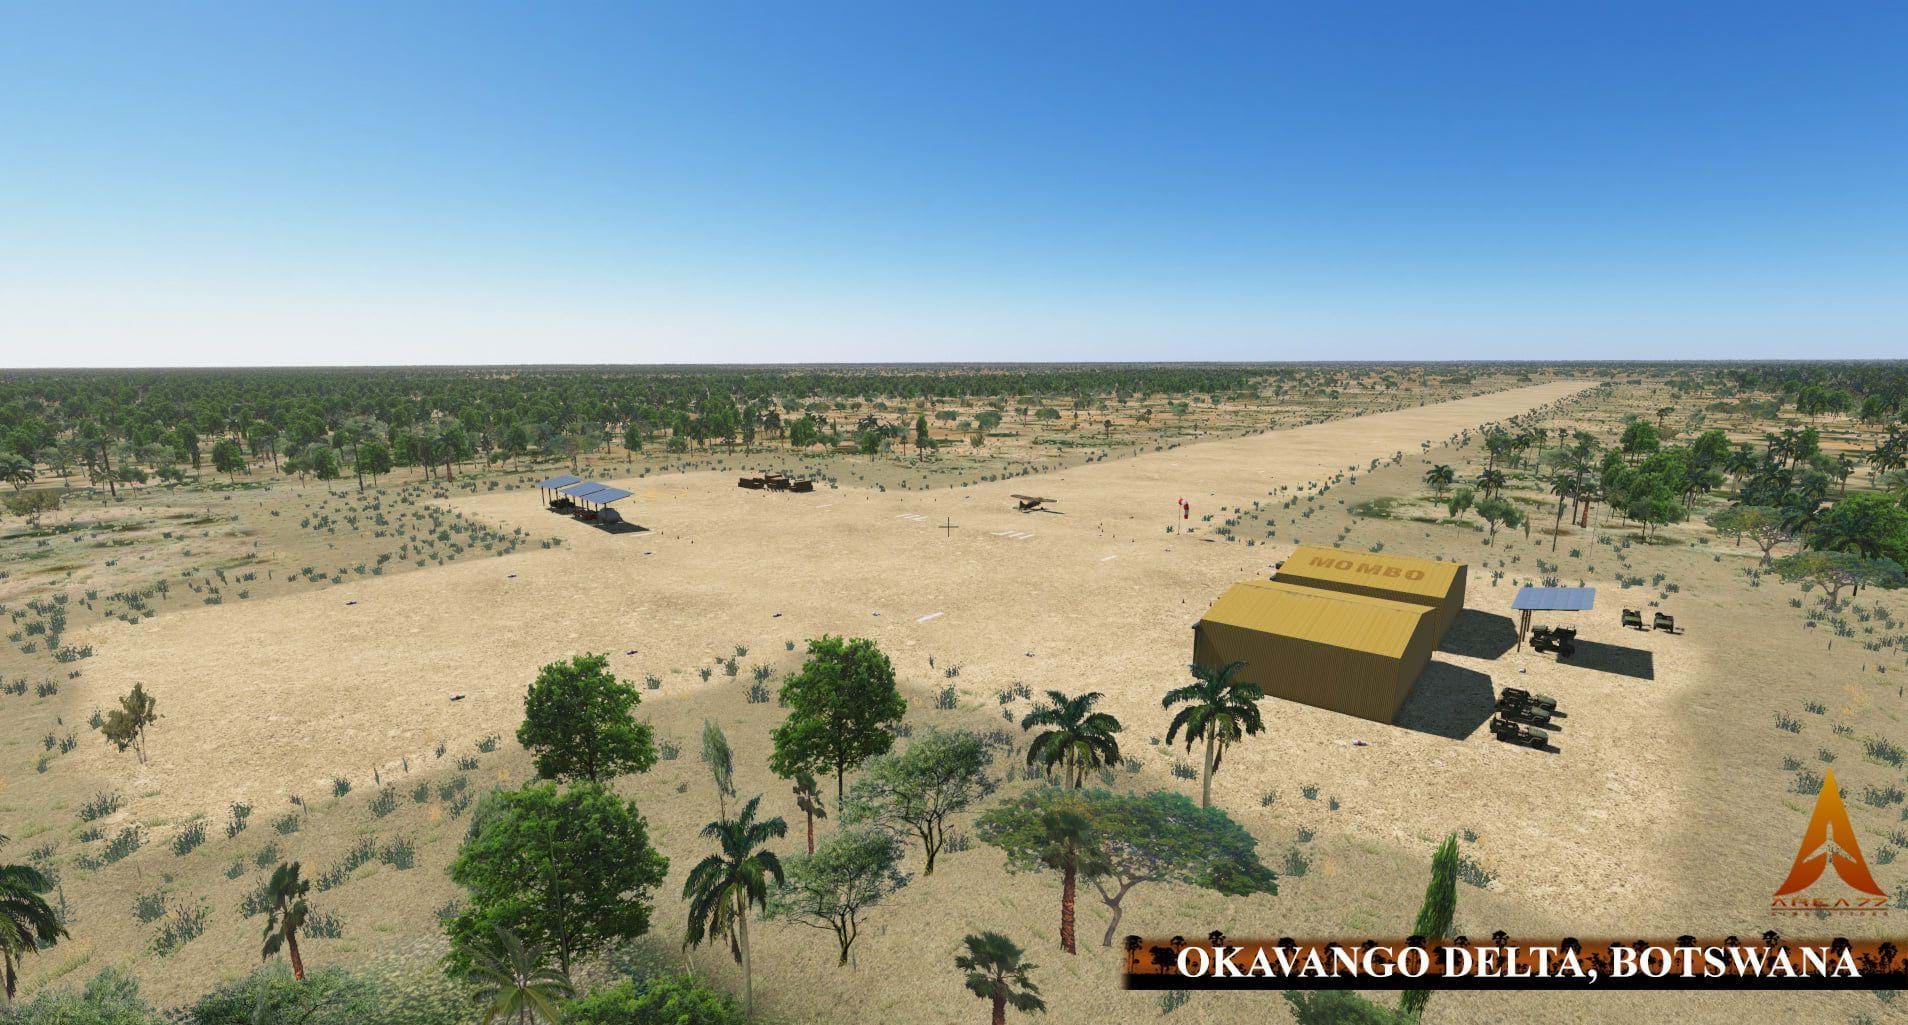 Freeware Okavango Delta scenery for X-Plane